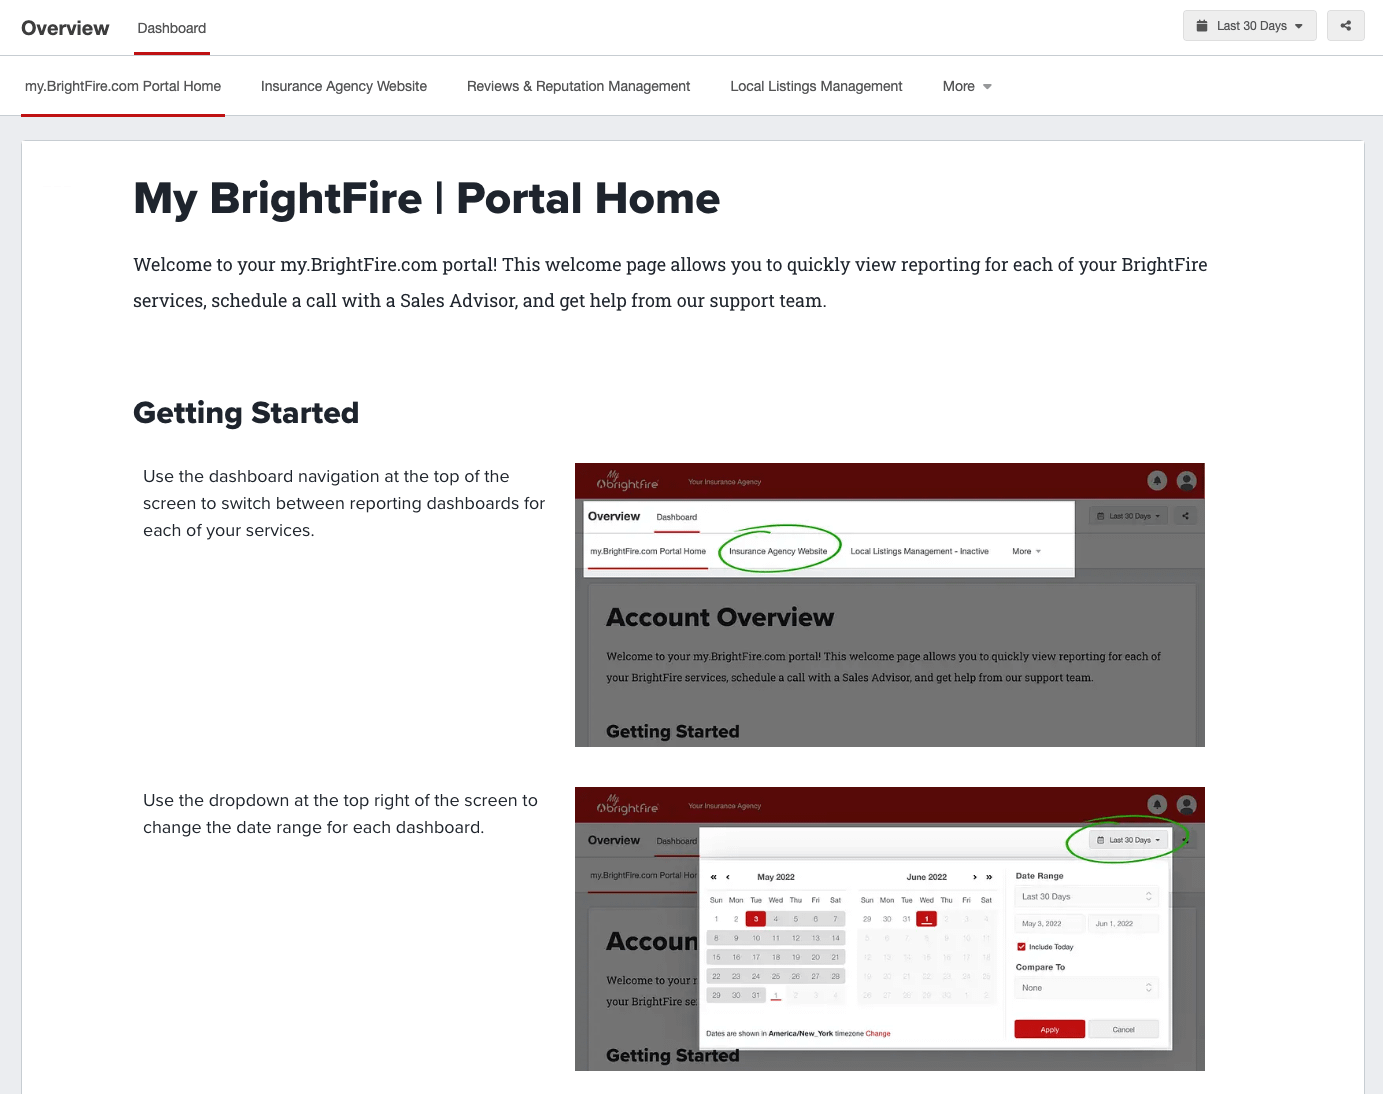 "My BrightFire" Customer Portal Provides Valuable Insights